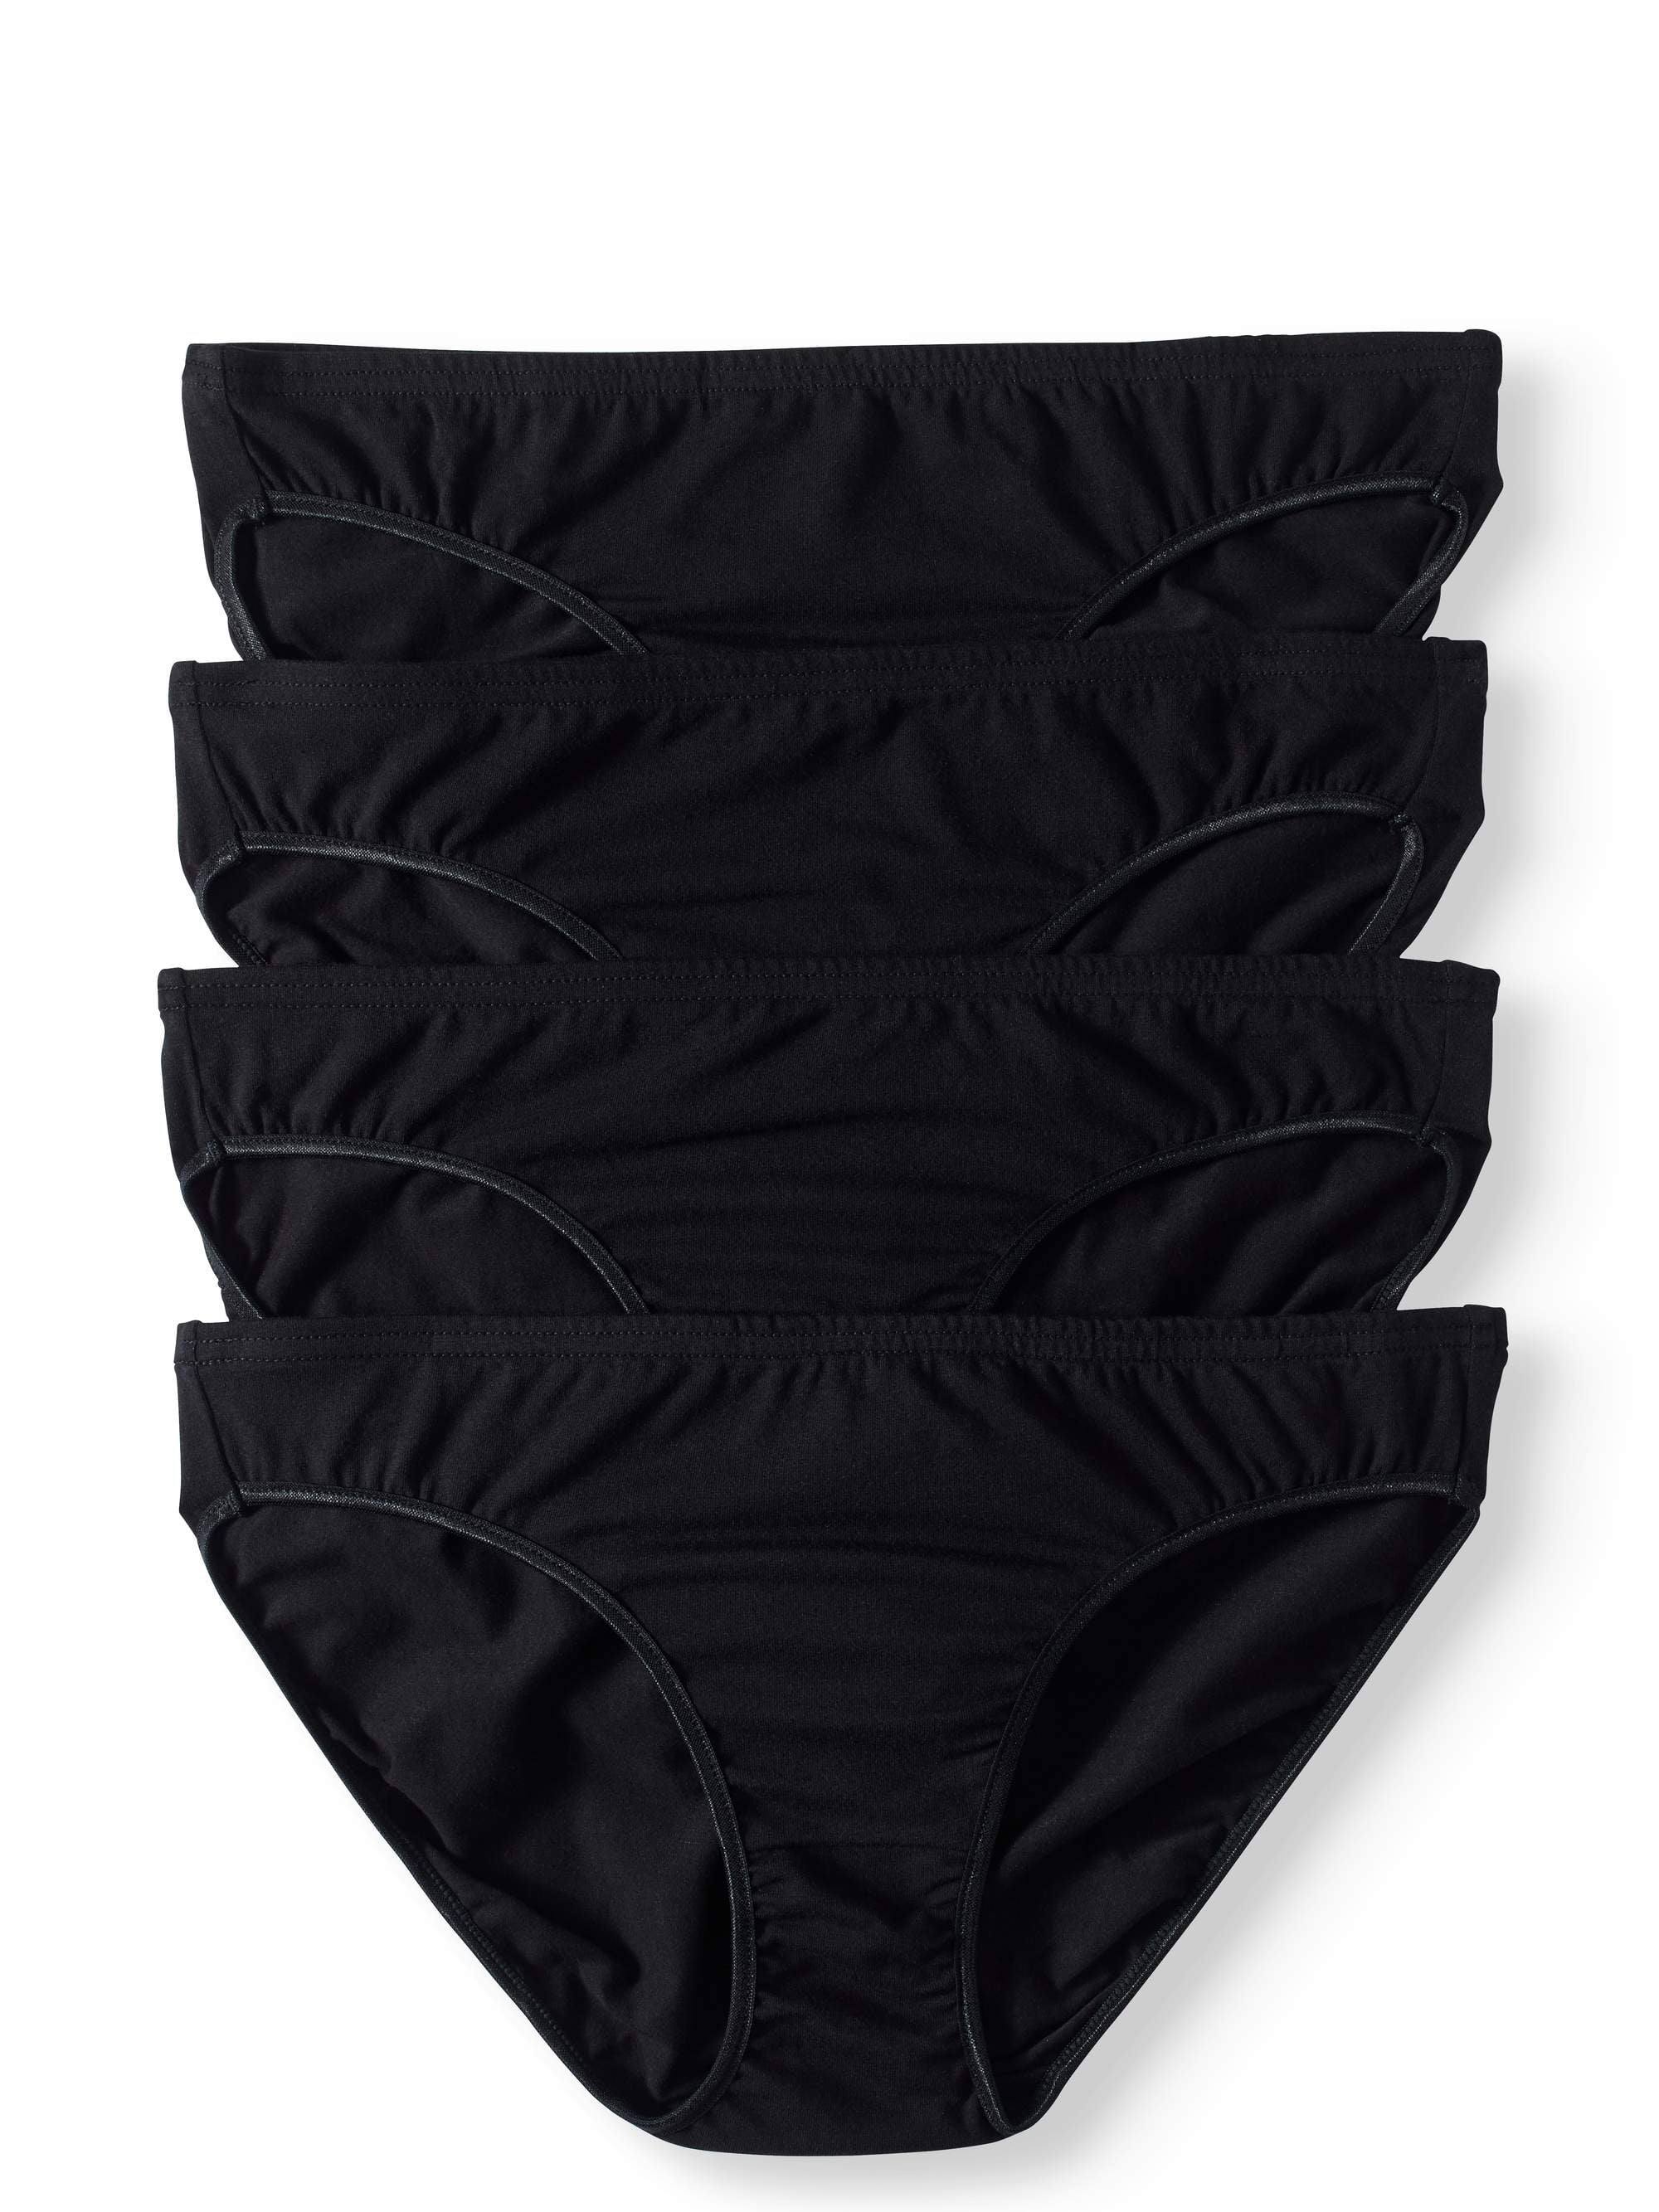 Best Fitting Panty Women's Cotton Stretch Bikini Panties, 4-Pack ...